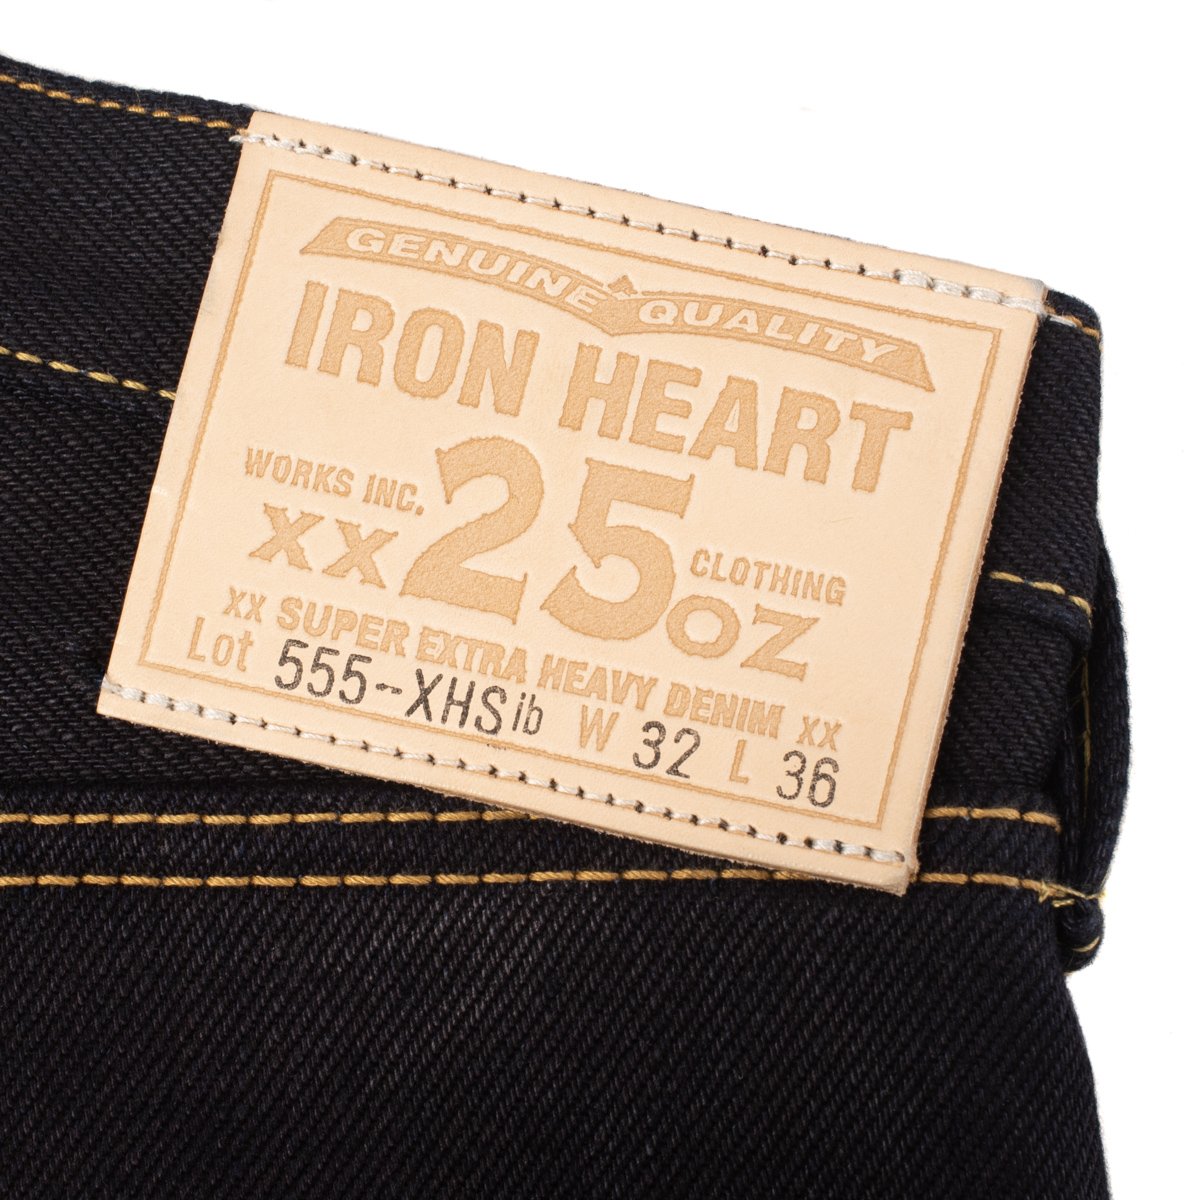 Iron Heart IH-555-XHSib 25oz Indigo/Black Selvedge Super Slim